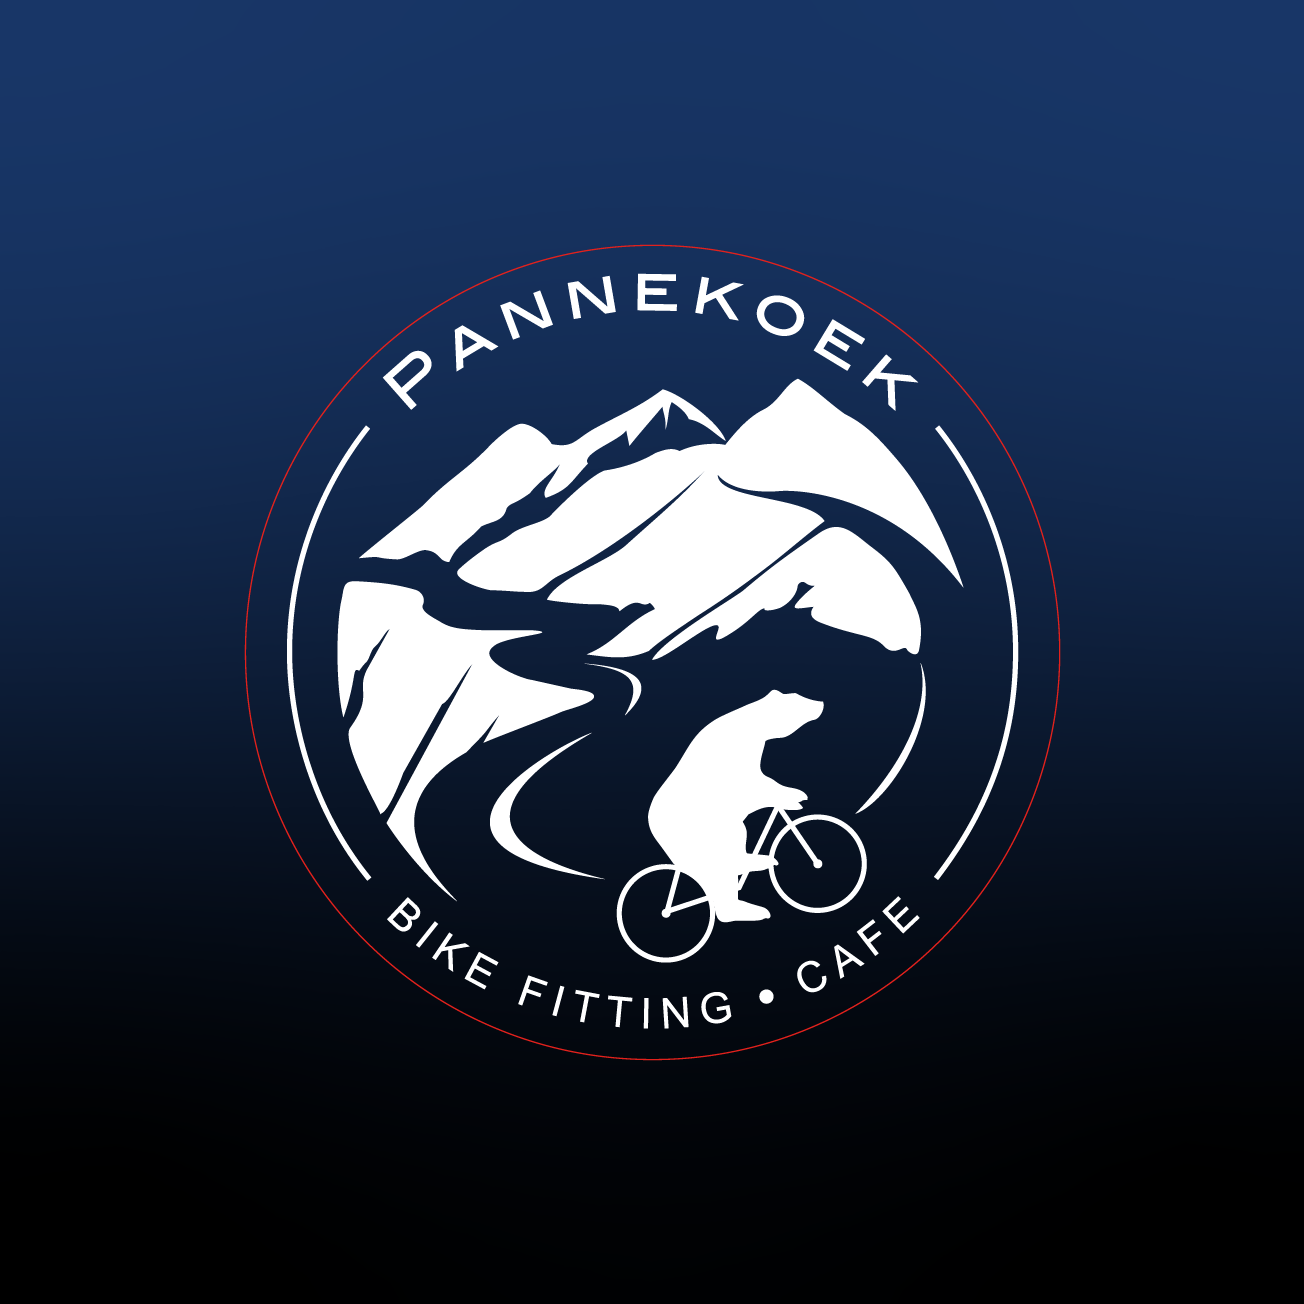 Club Image for PANNEKOEK VC